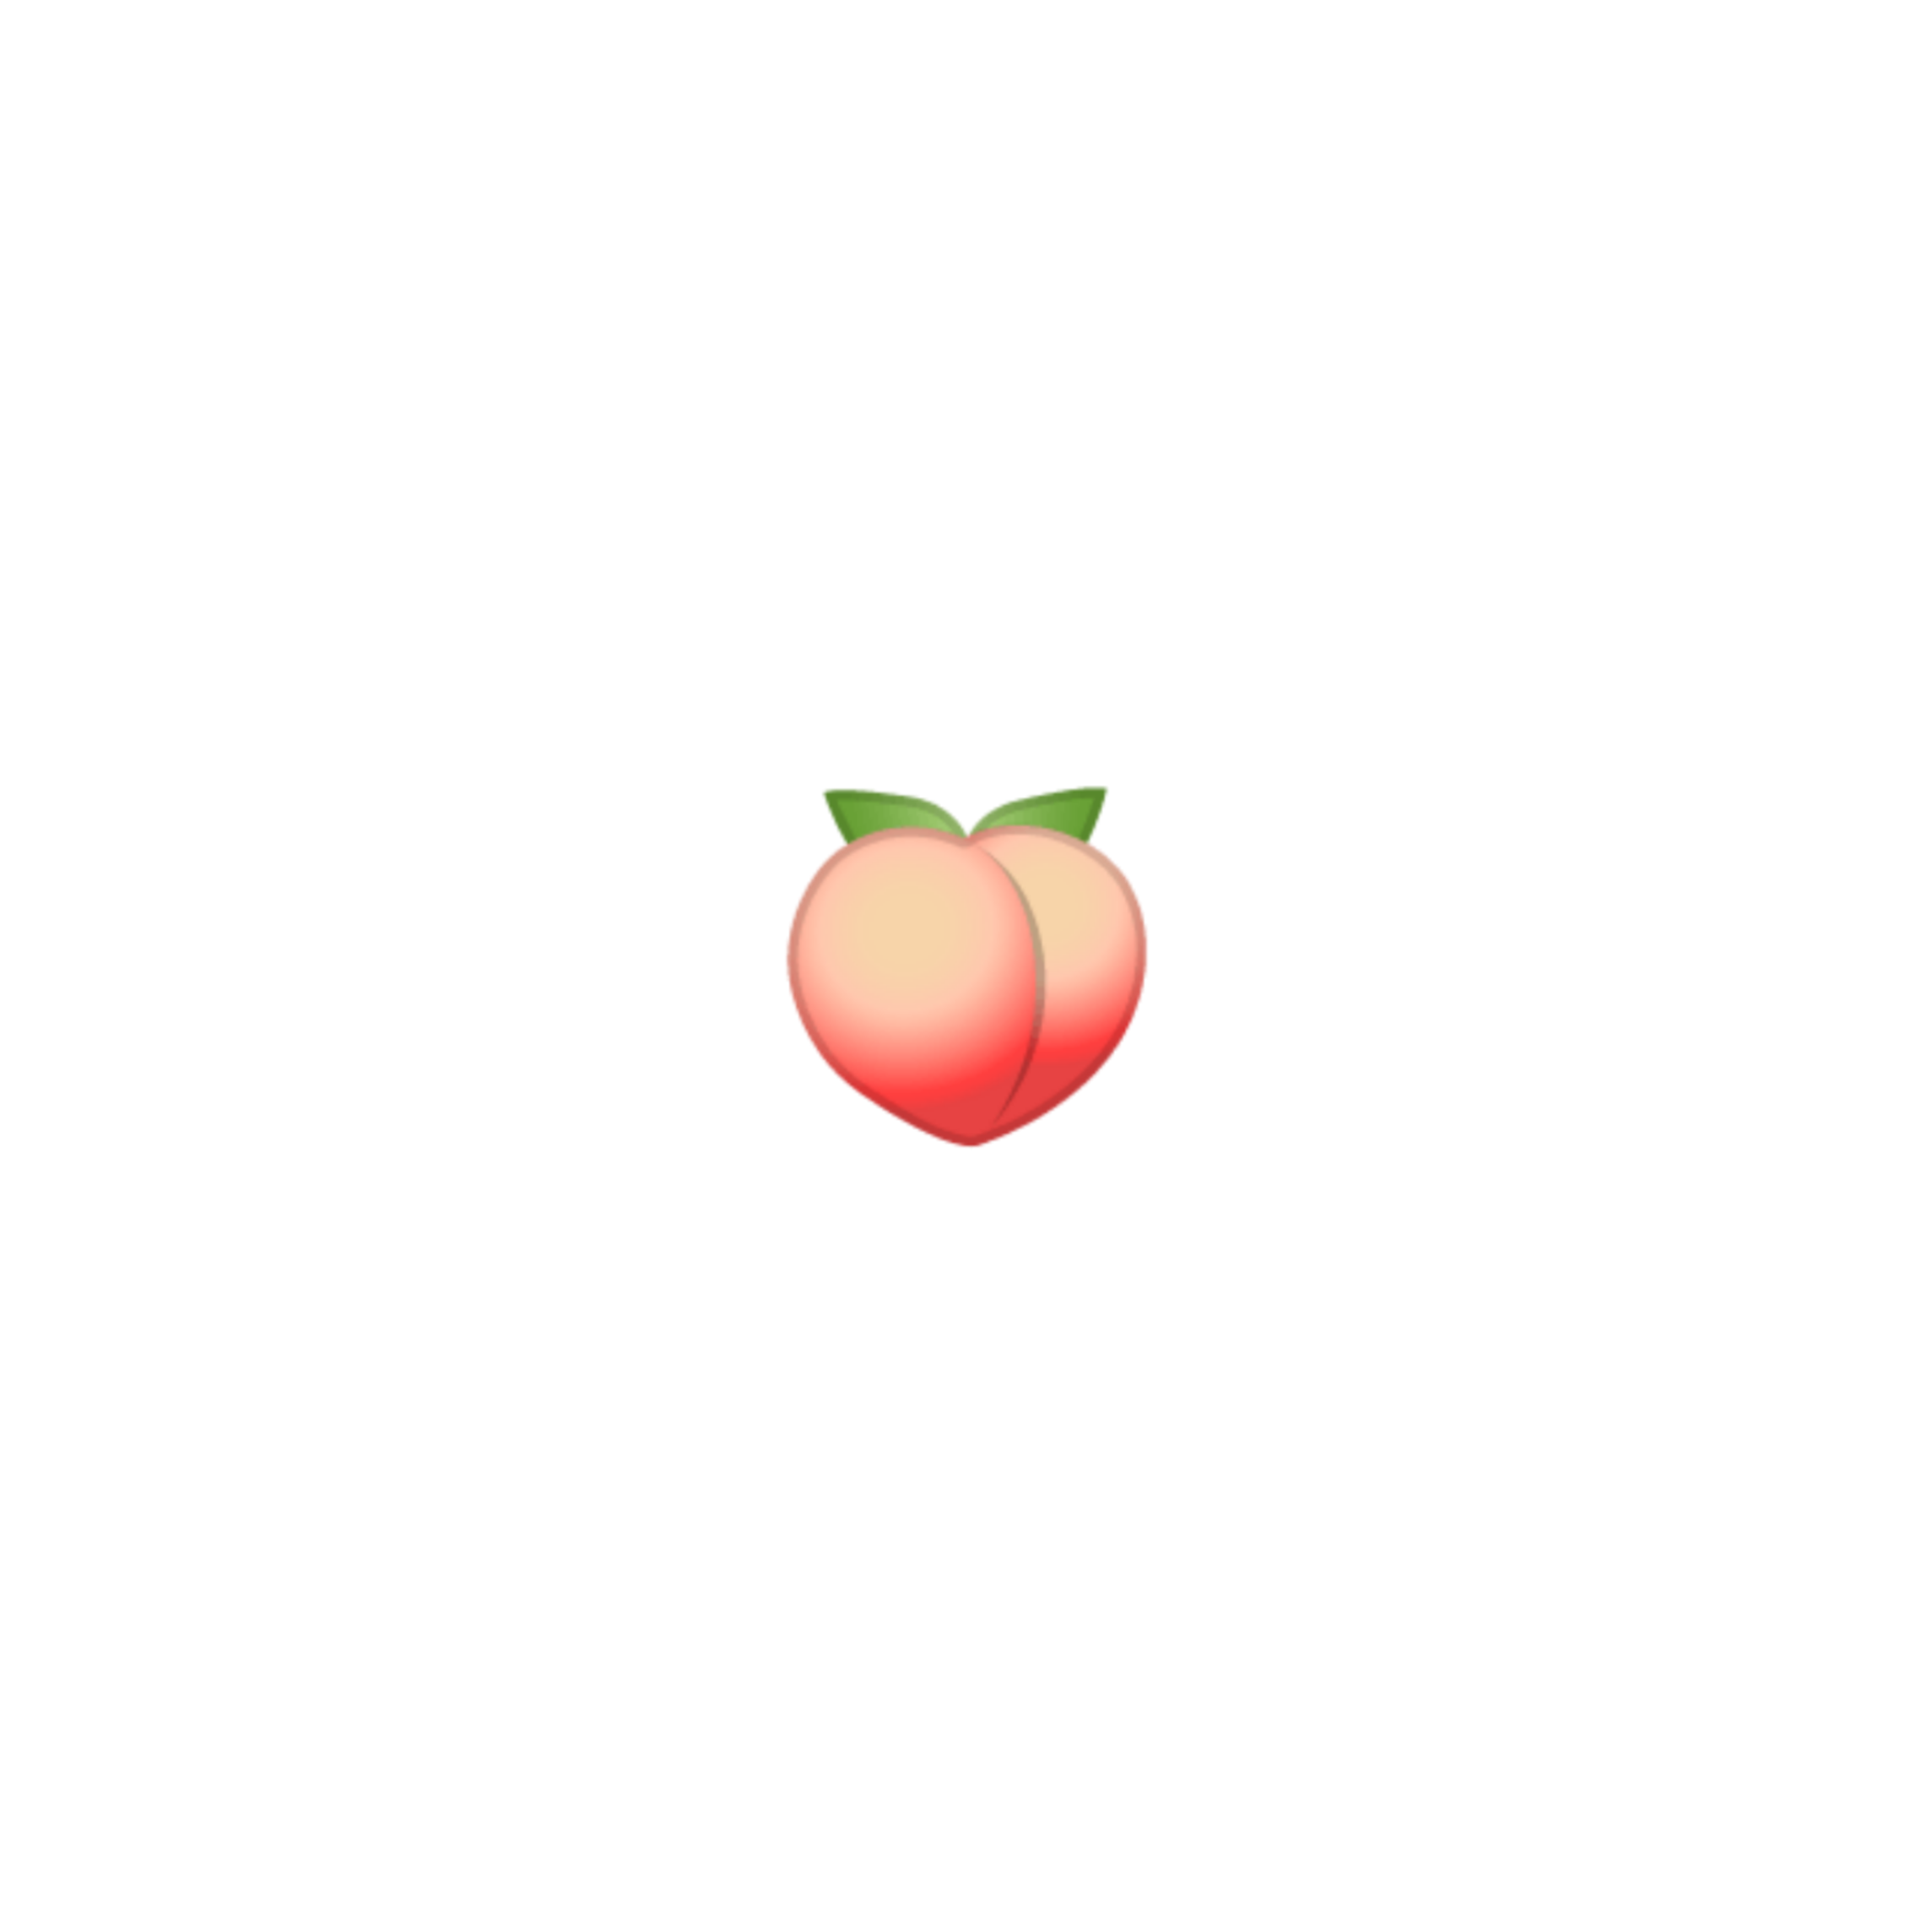 This visual is about персик peach эмоджифрукт фрукт эмоджи freetoedit #перс...